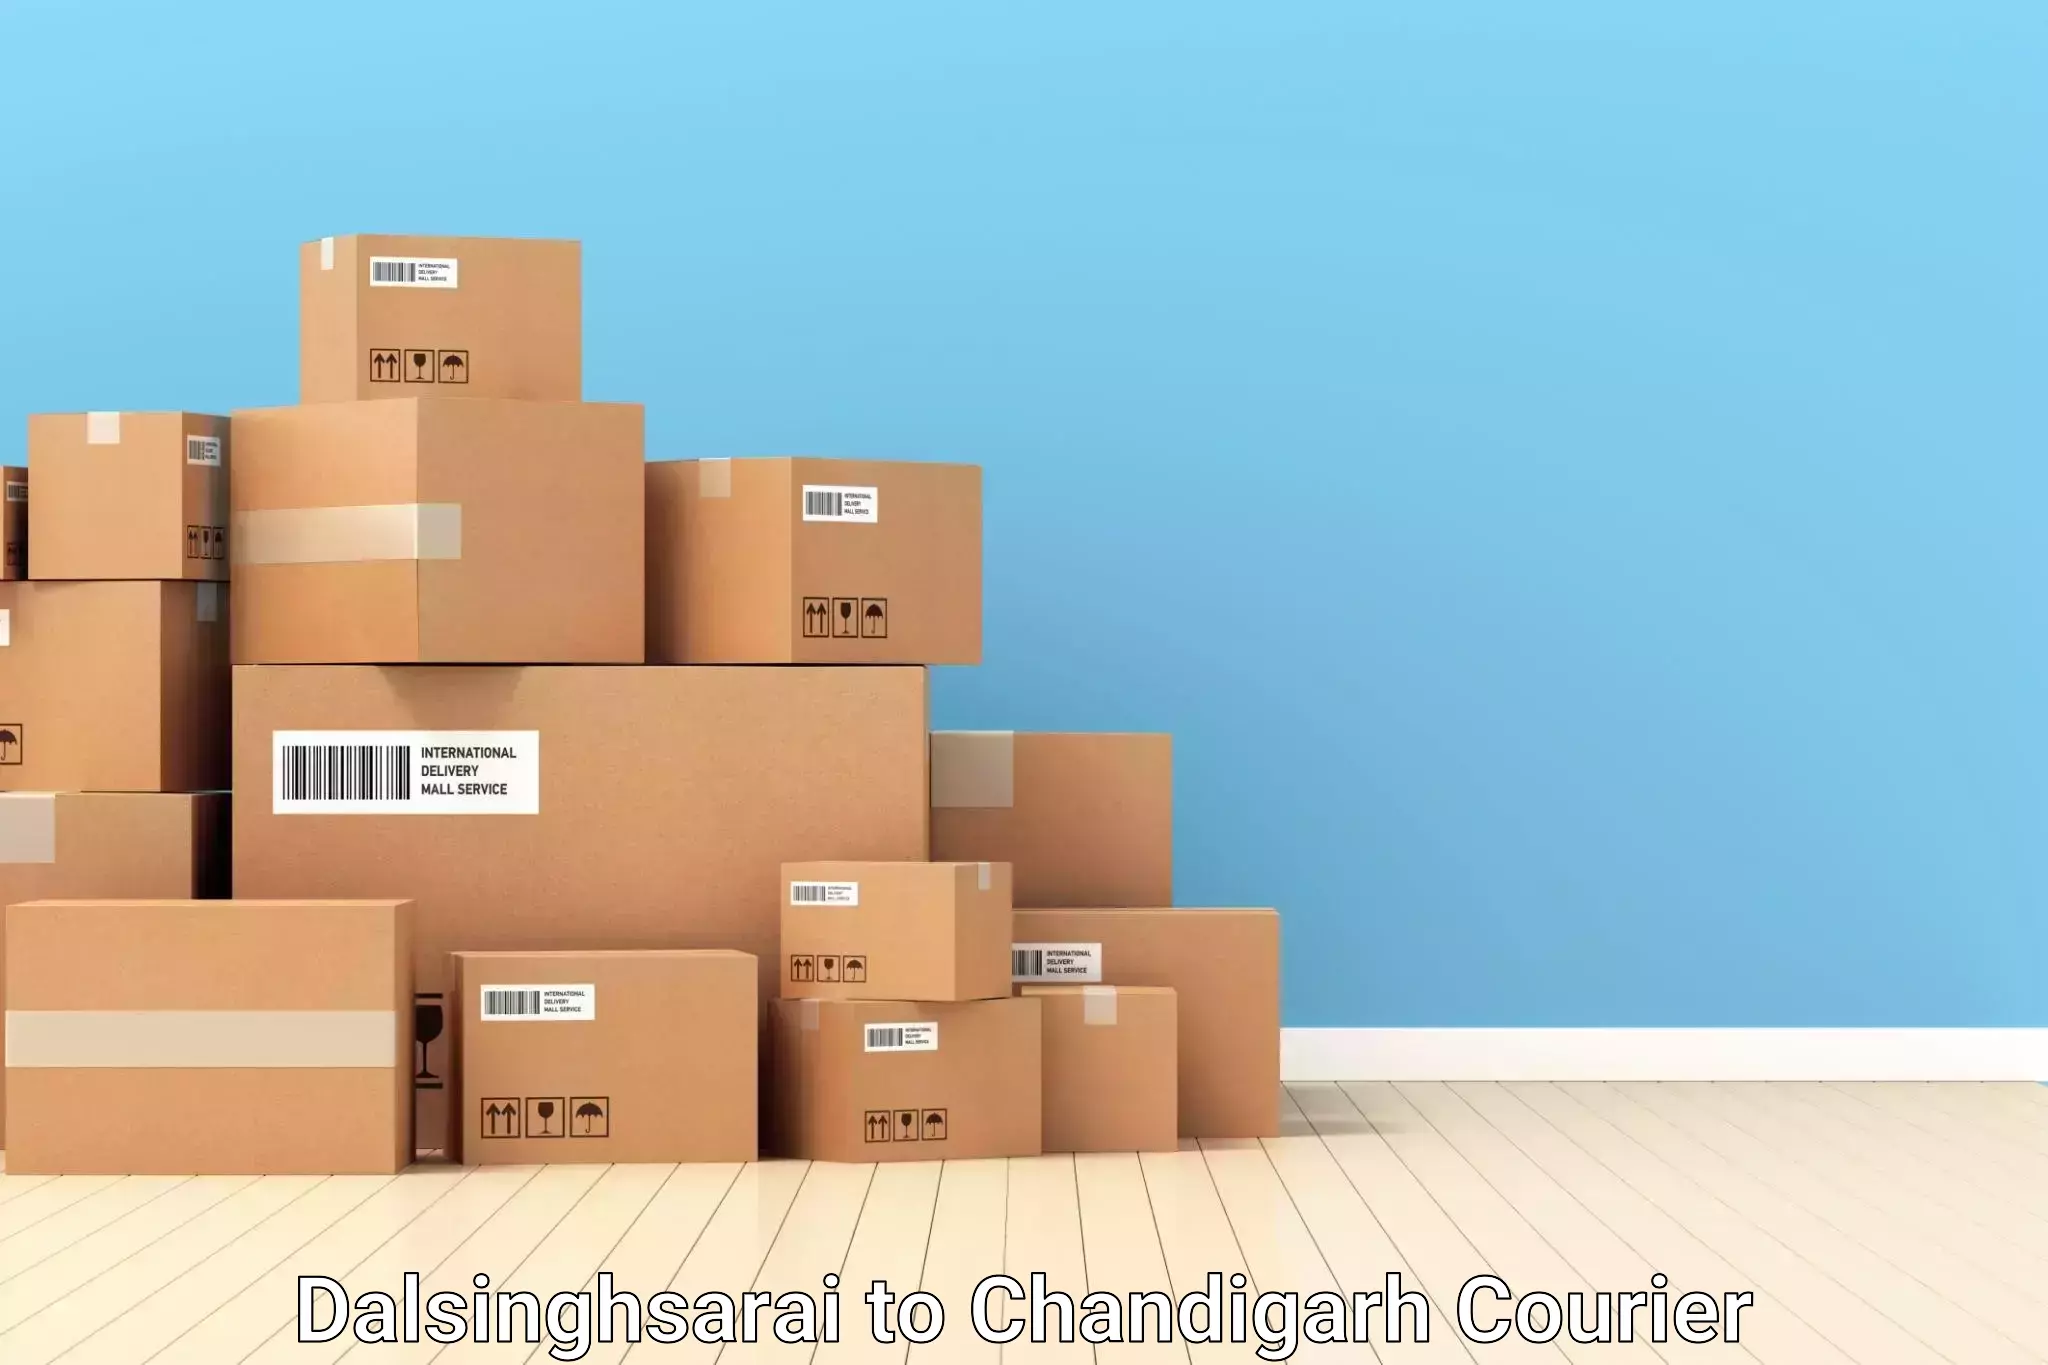 Luggage shipment specialists Dalsinghsarai to Chandigarh